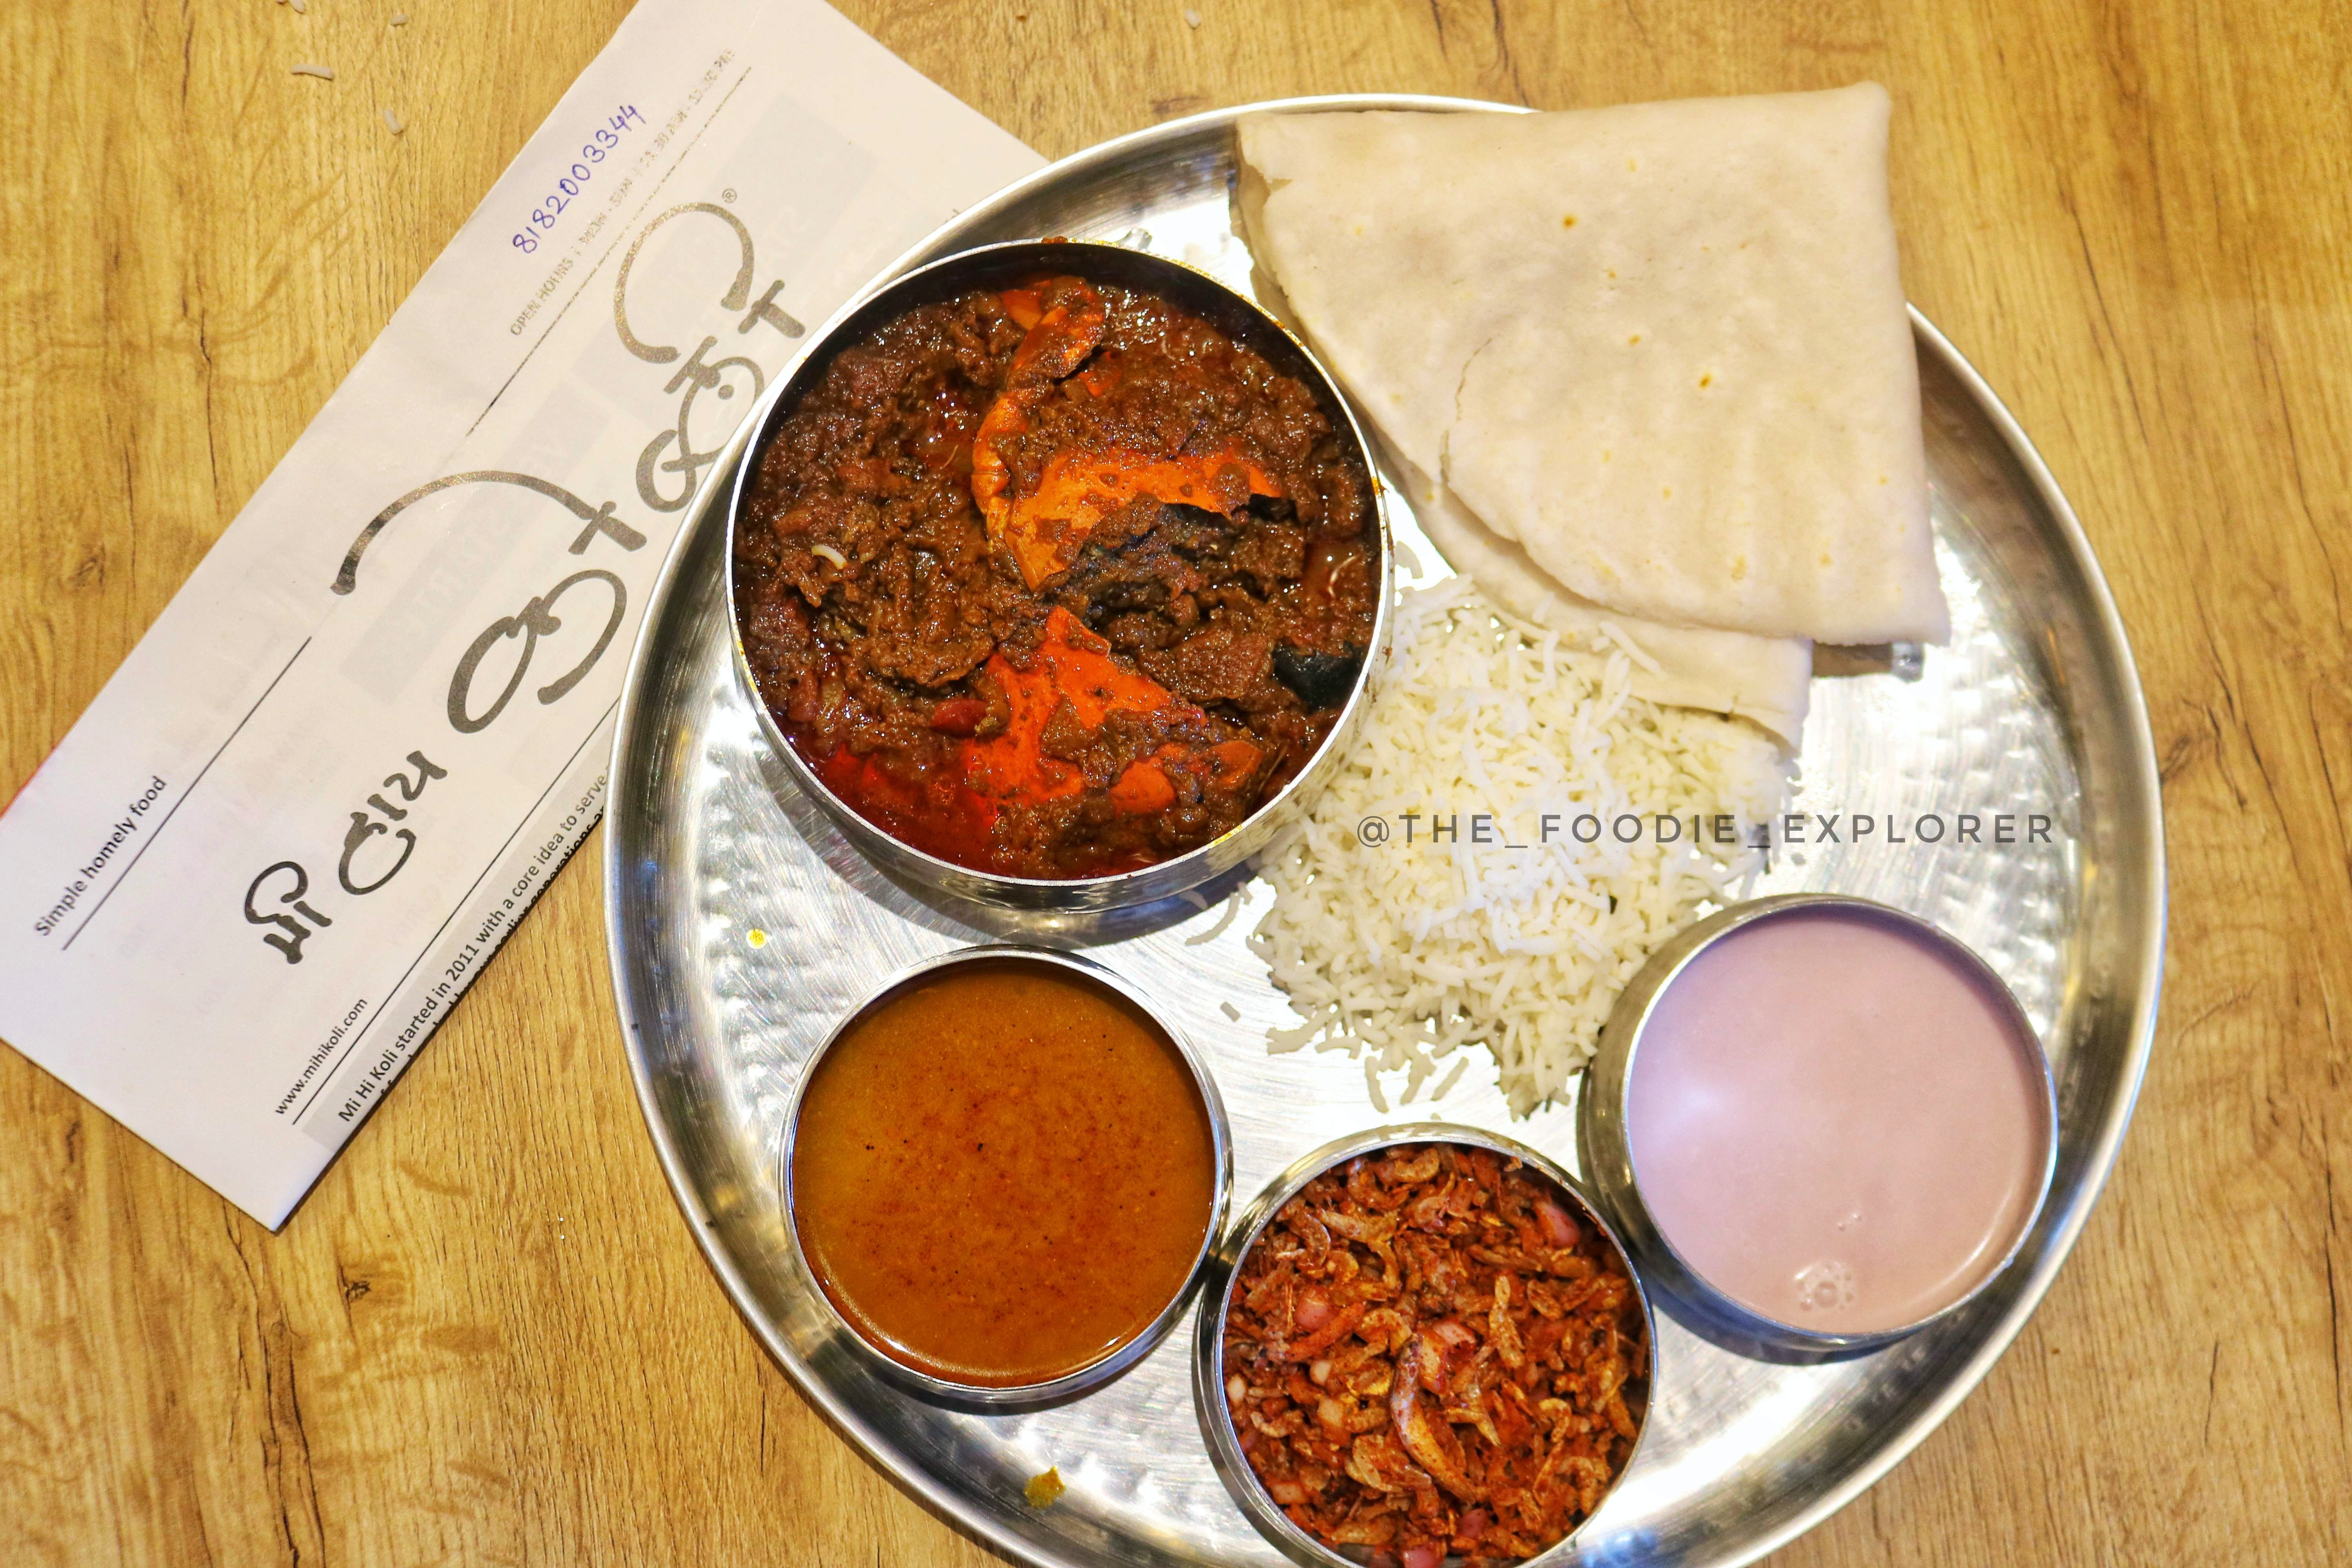 Cuisine,Dish,Food,Ingredient,Muhammara,Masala,Indian cuisine,Recipe,Tandoori masala,Curry